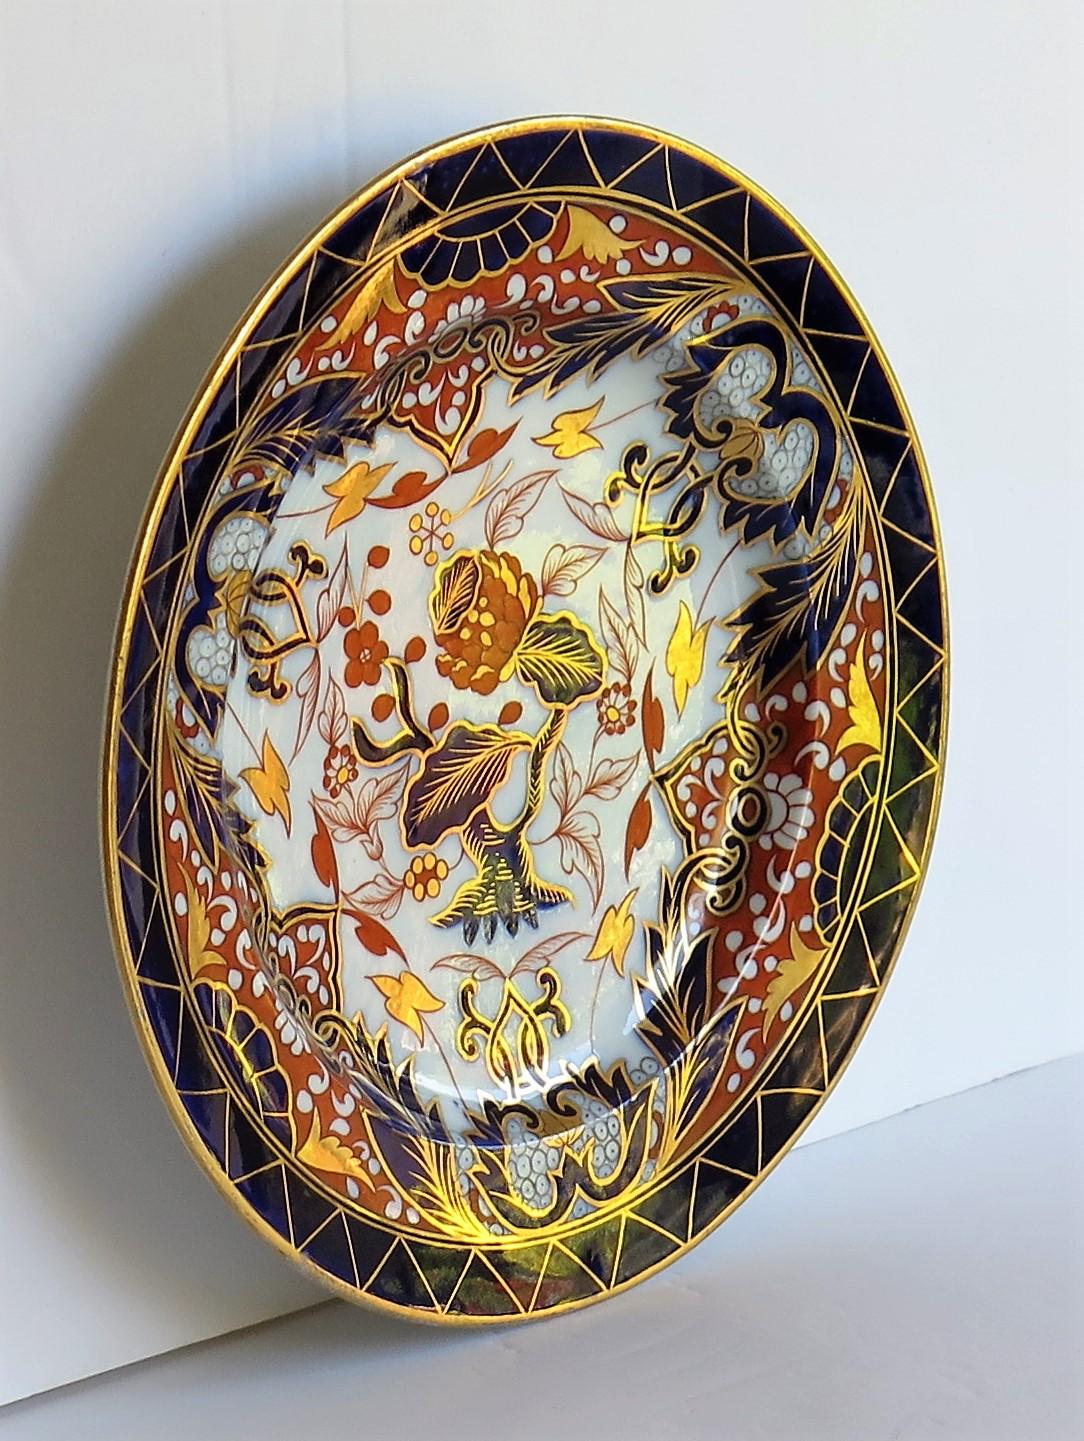 19th Century Early Davenport Porcelain Plate in Imari King's Pattern 330, English, circa 1820